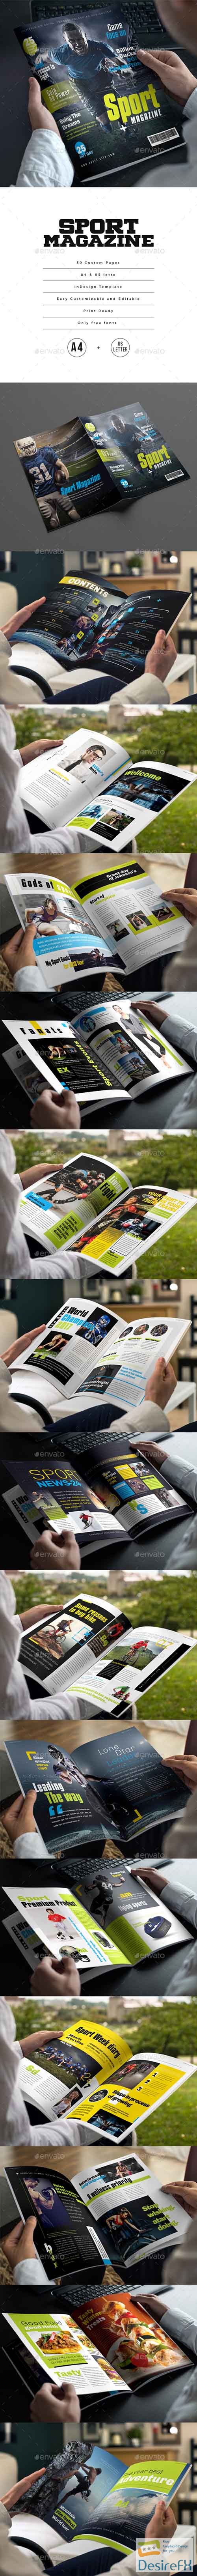 Sport Magazine 21376536